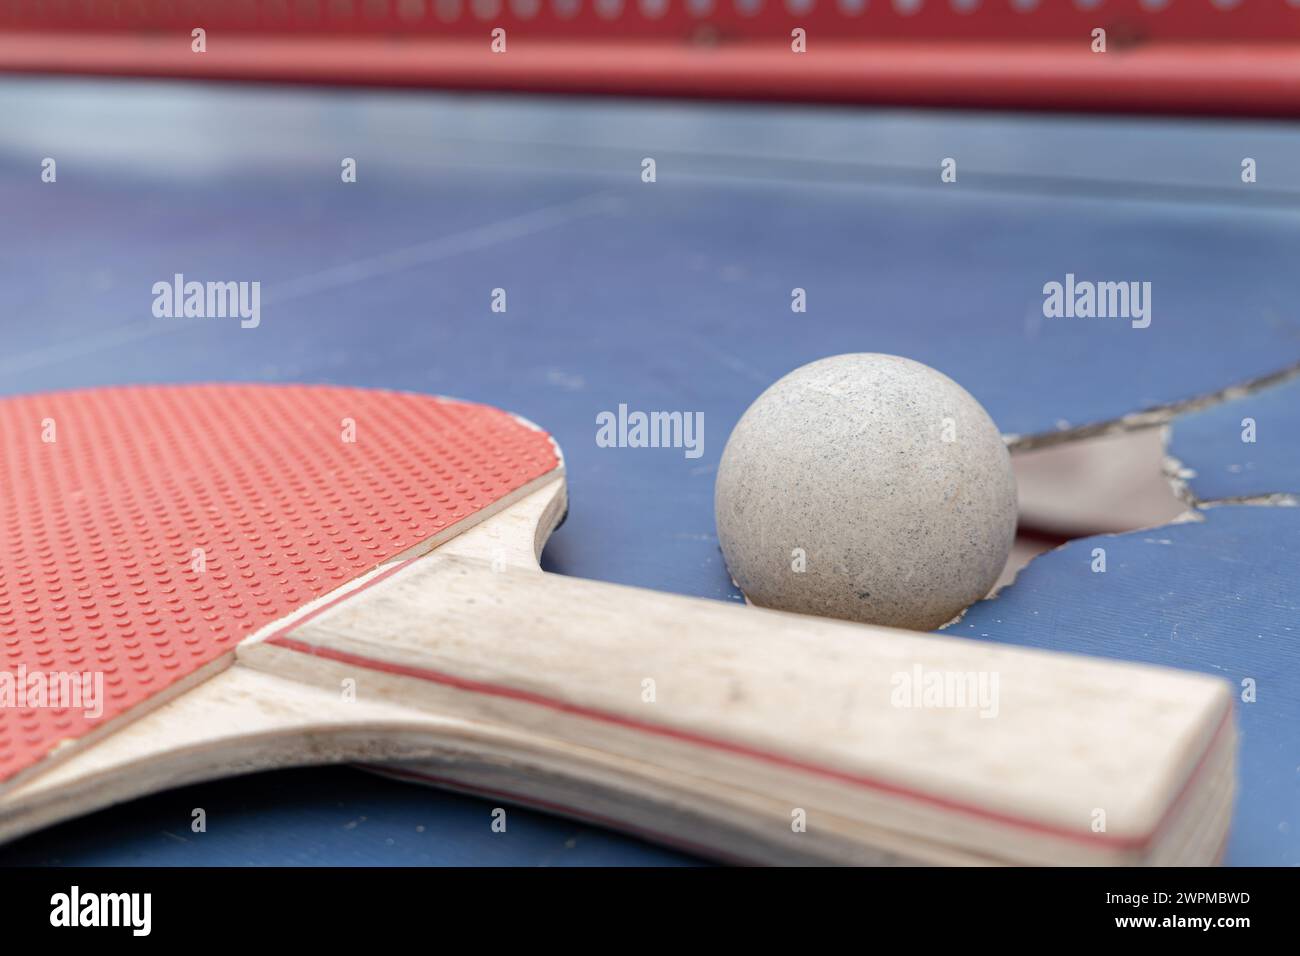 angle view pingpong ball and racket on a damaged table at horizontal composition Stock Photo